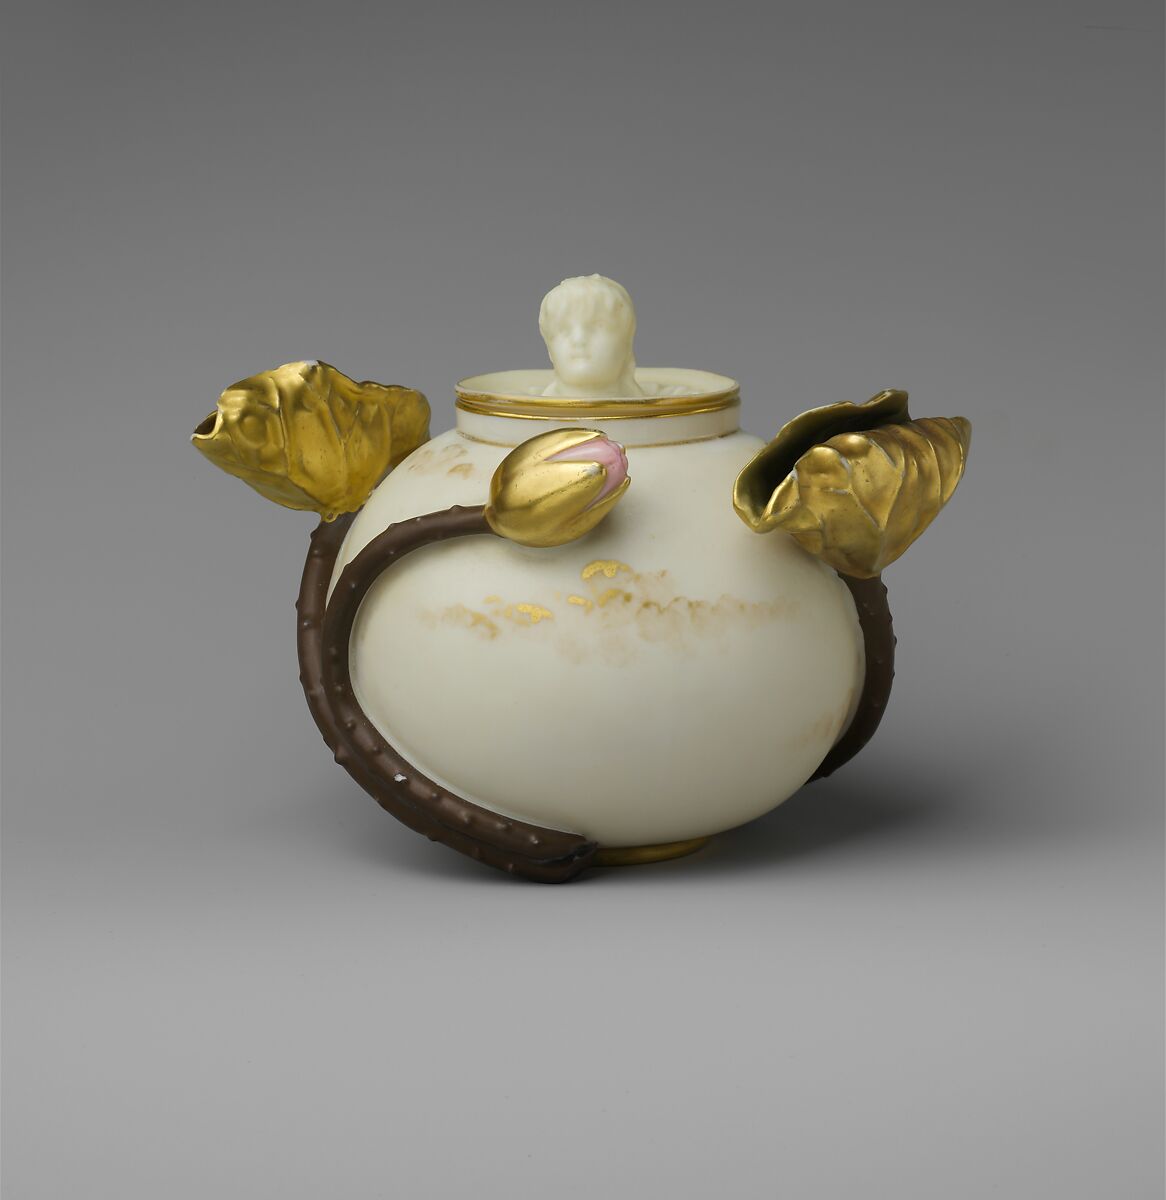 Covered Potpourri Jar, Ott and Brewer (American, Trenton, New Jersey, 1871–1893), Belleek porcelain, American 